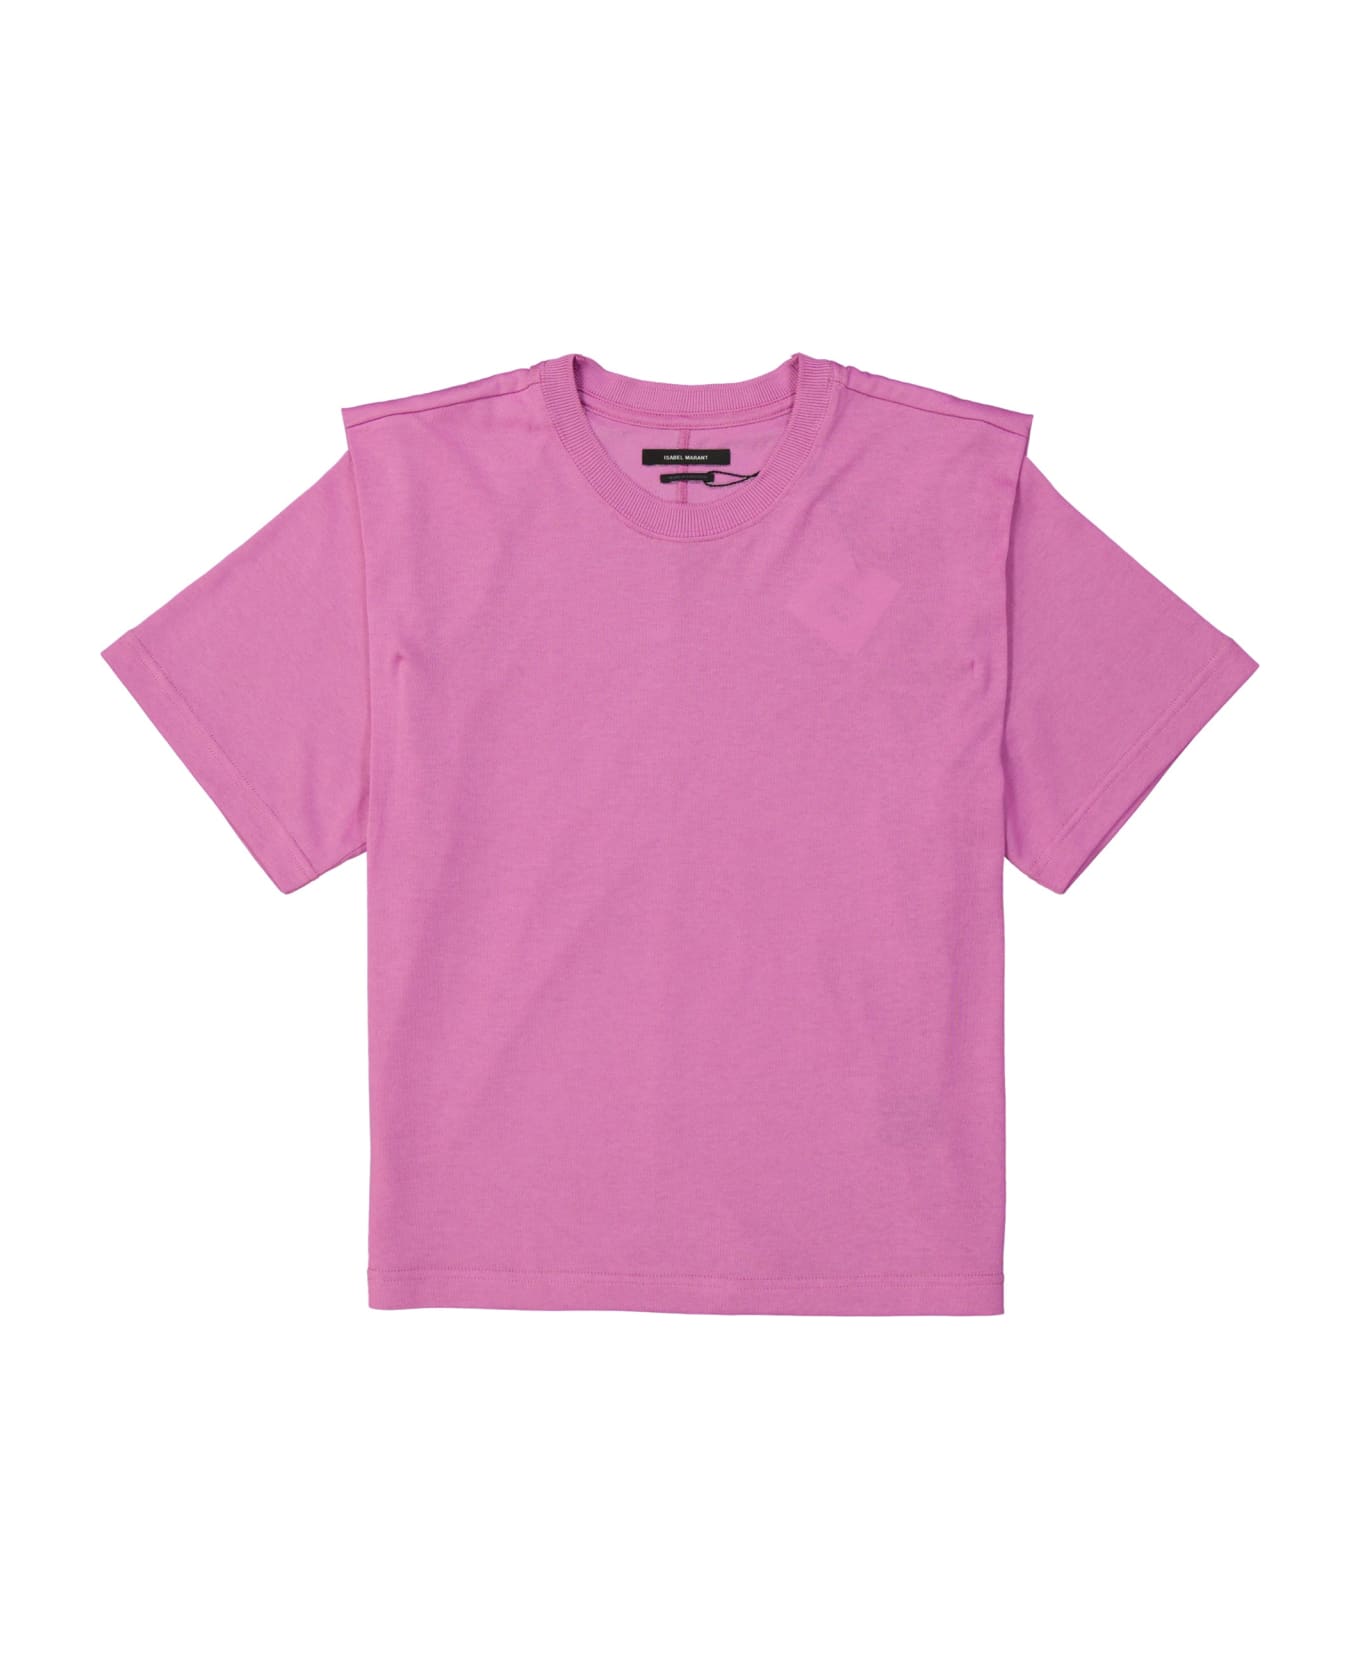 Marant Étoile Isabel Marant Etoil Zelitos T-shirt - Pink Tシャツ